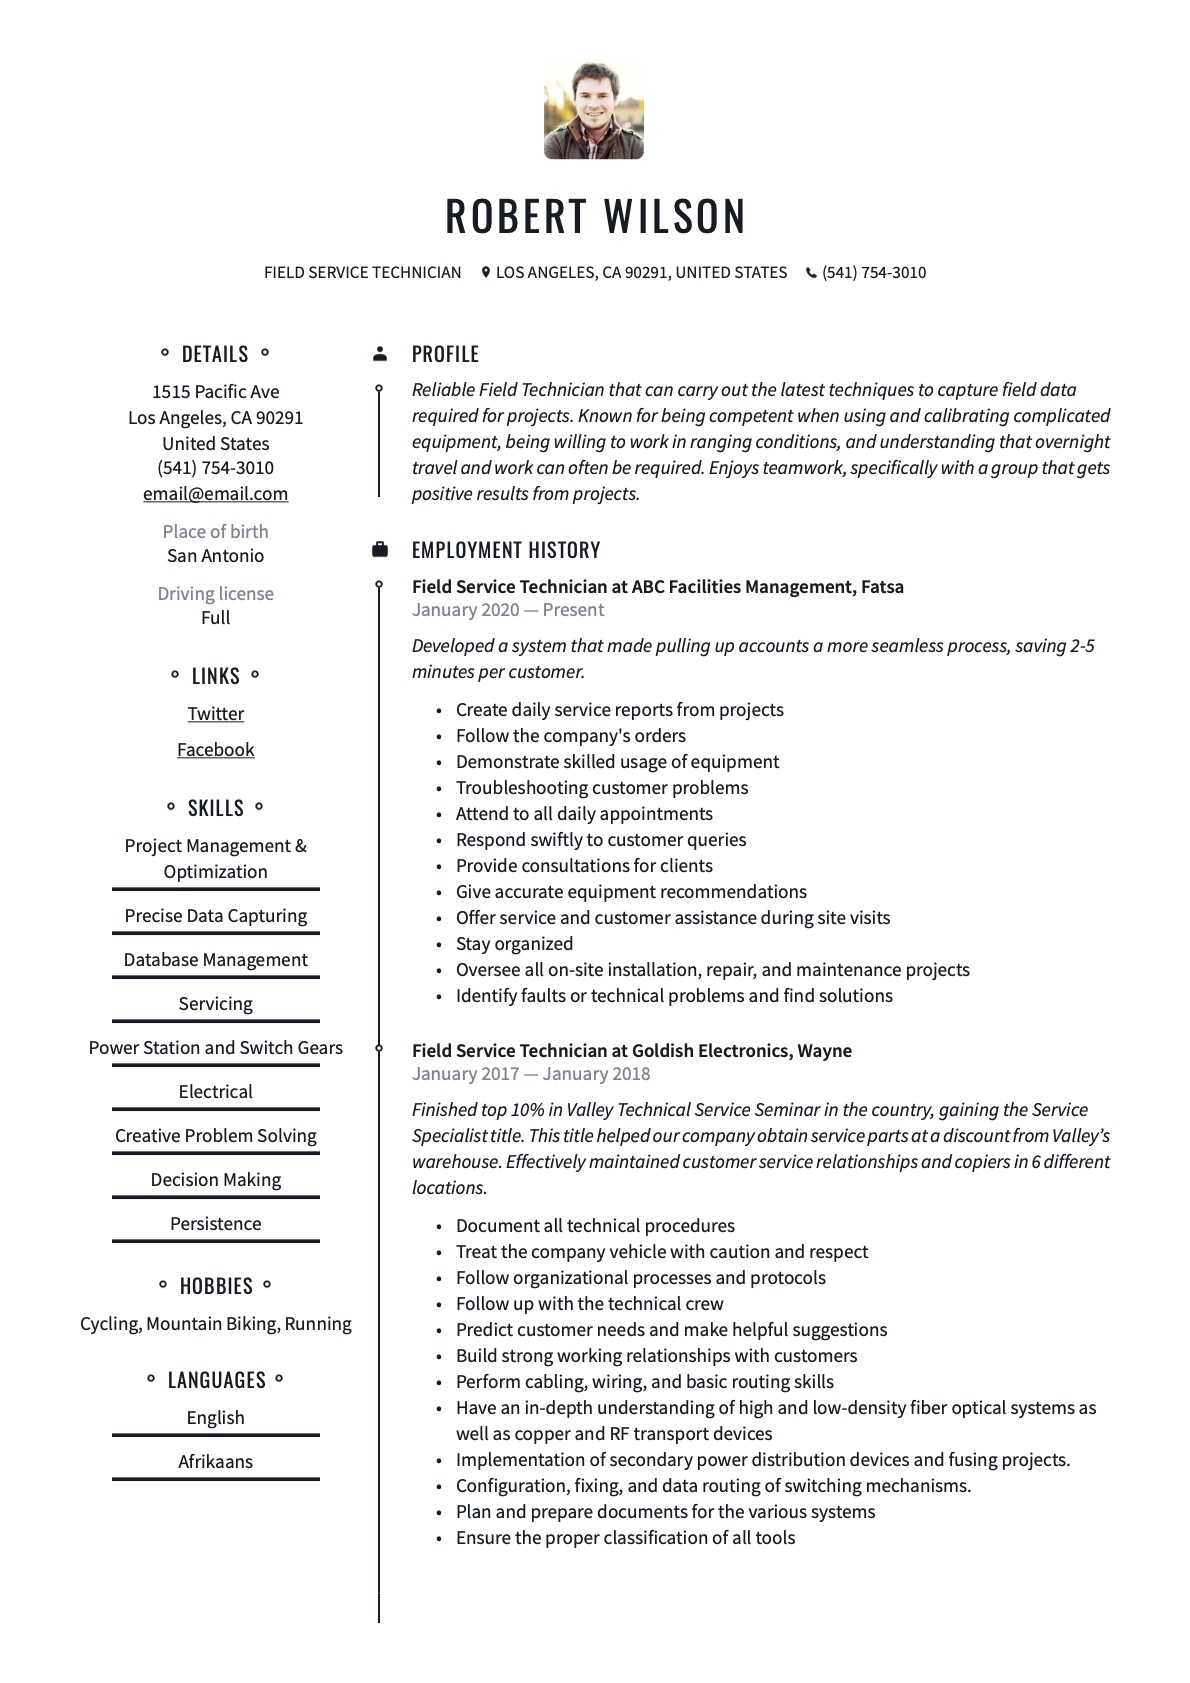 Example resume Field Service Technician-2